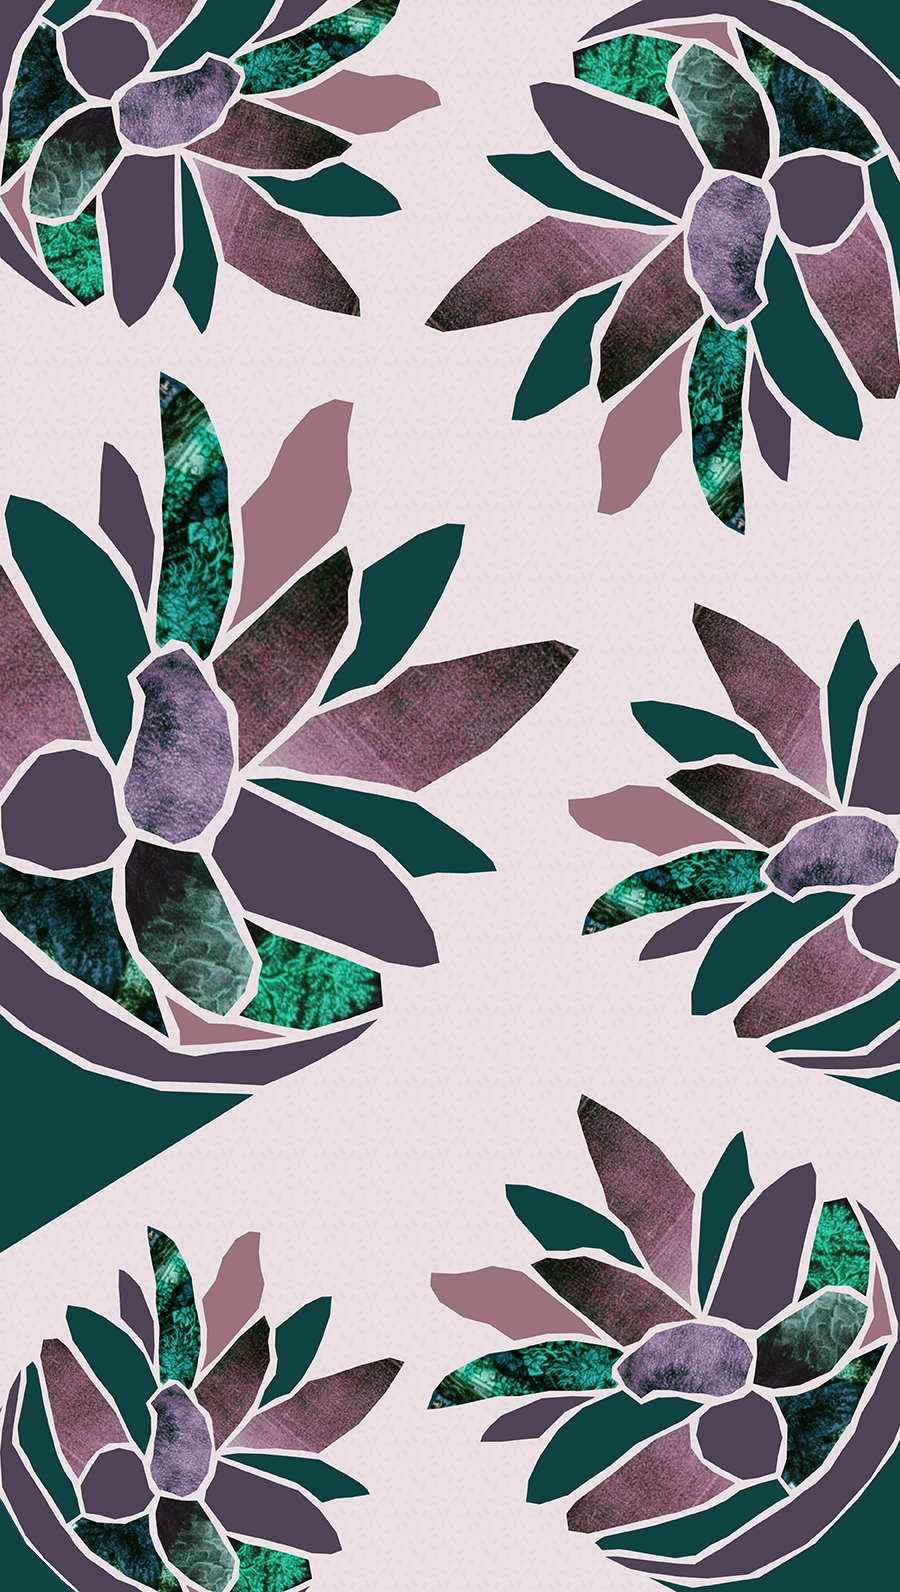 saftige iphone wallpaper,muster,grün,blatt,lila,pflanze